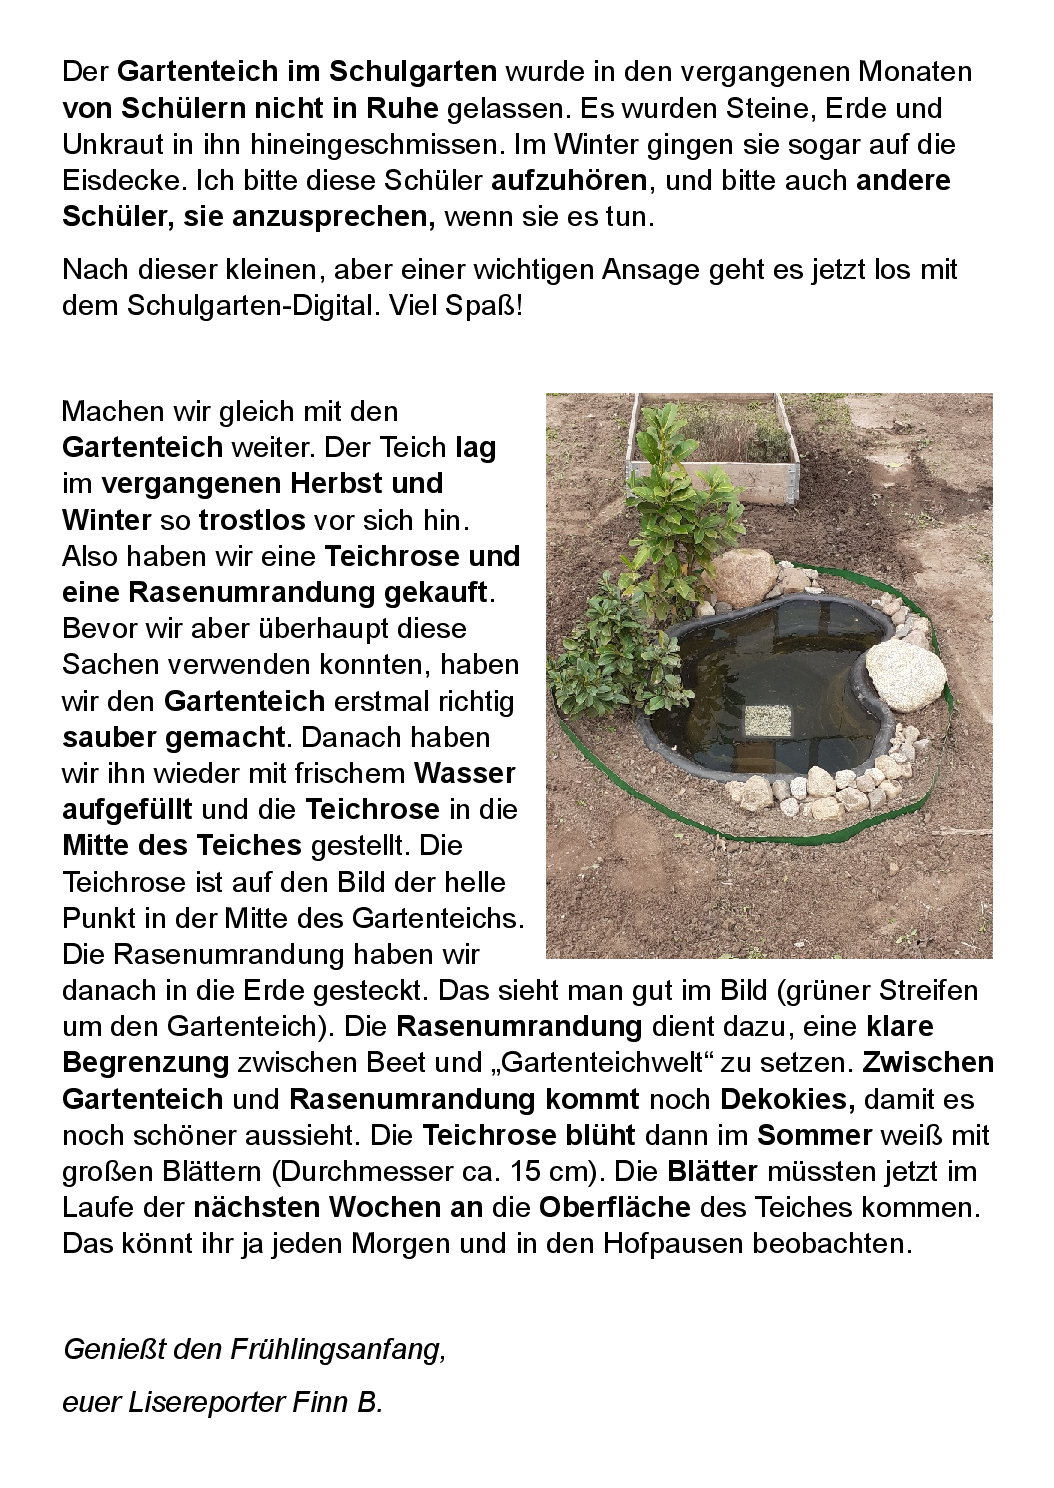 Schulgarten-Digital-Gartenteich_braucht_Liebe.png